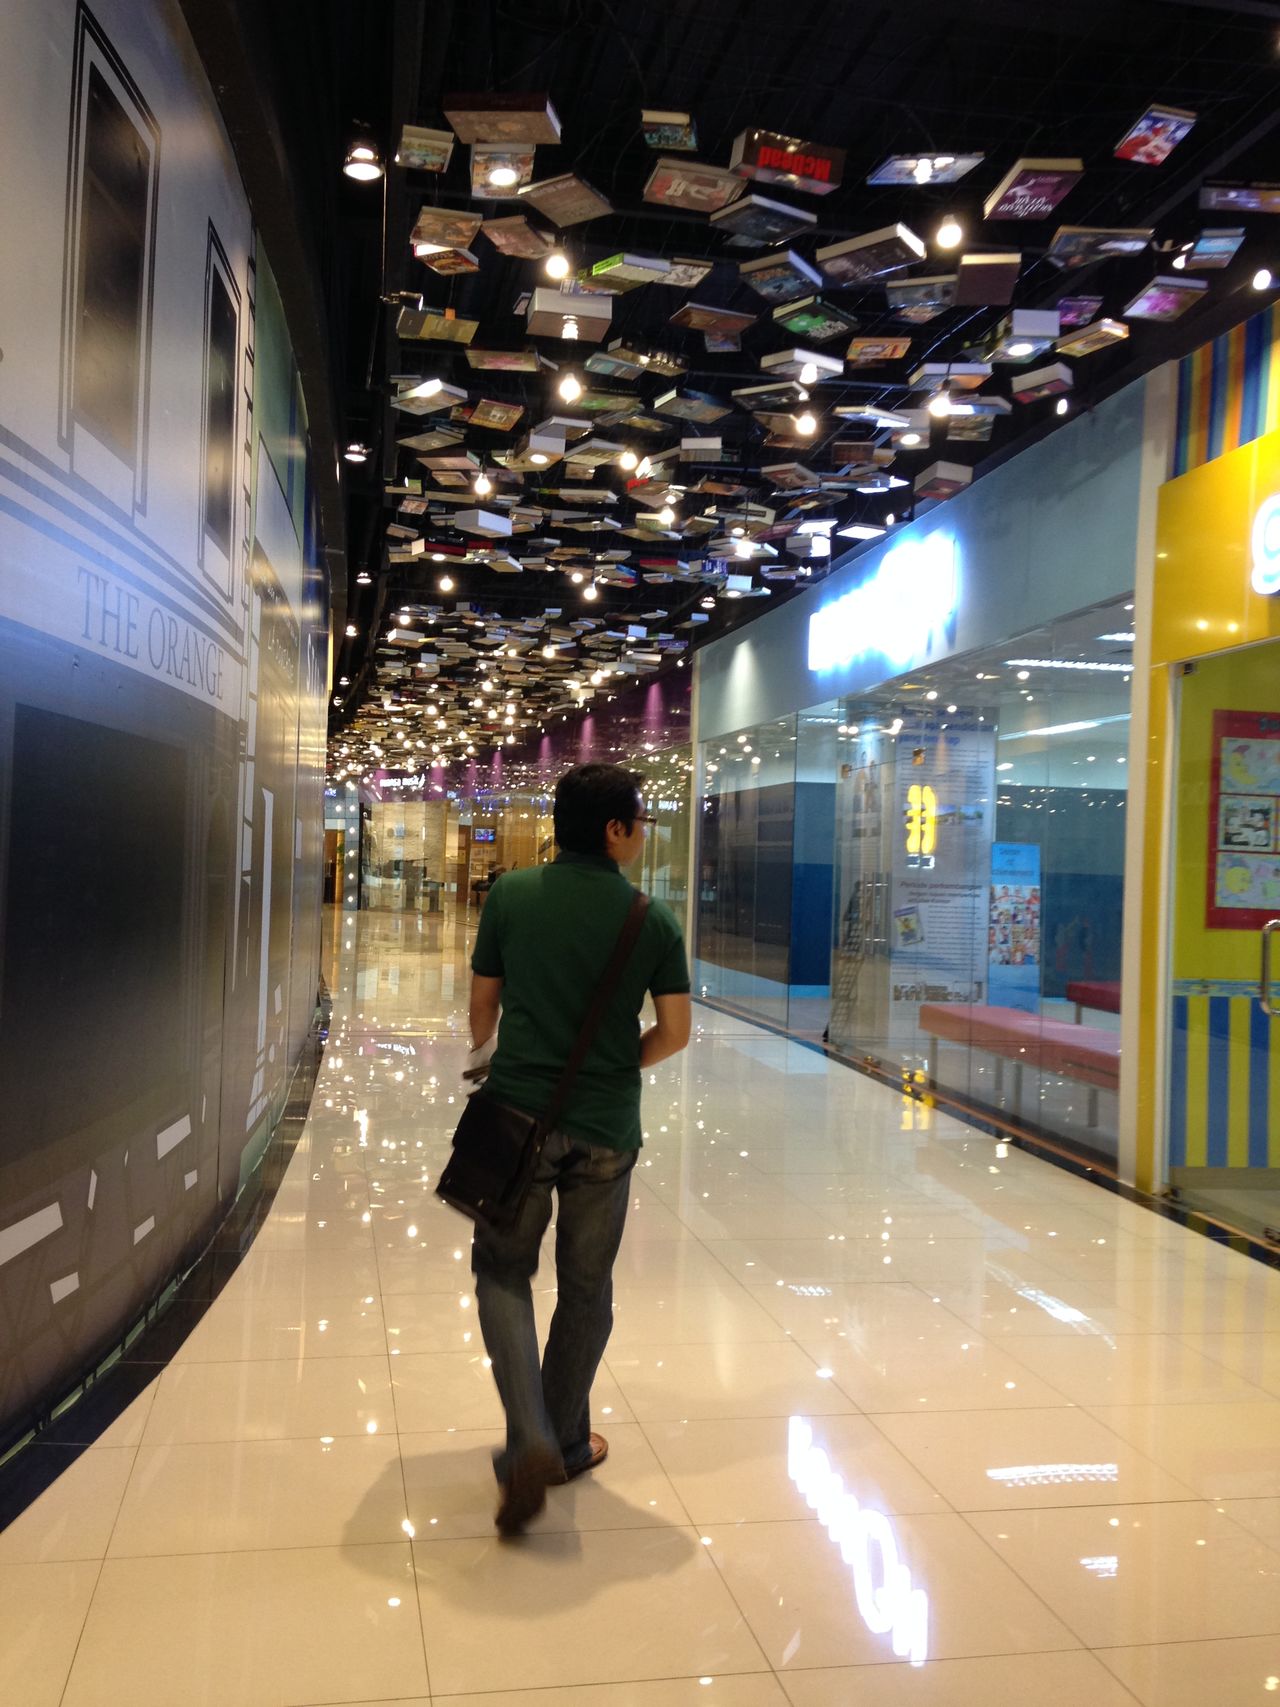 Aeon mall